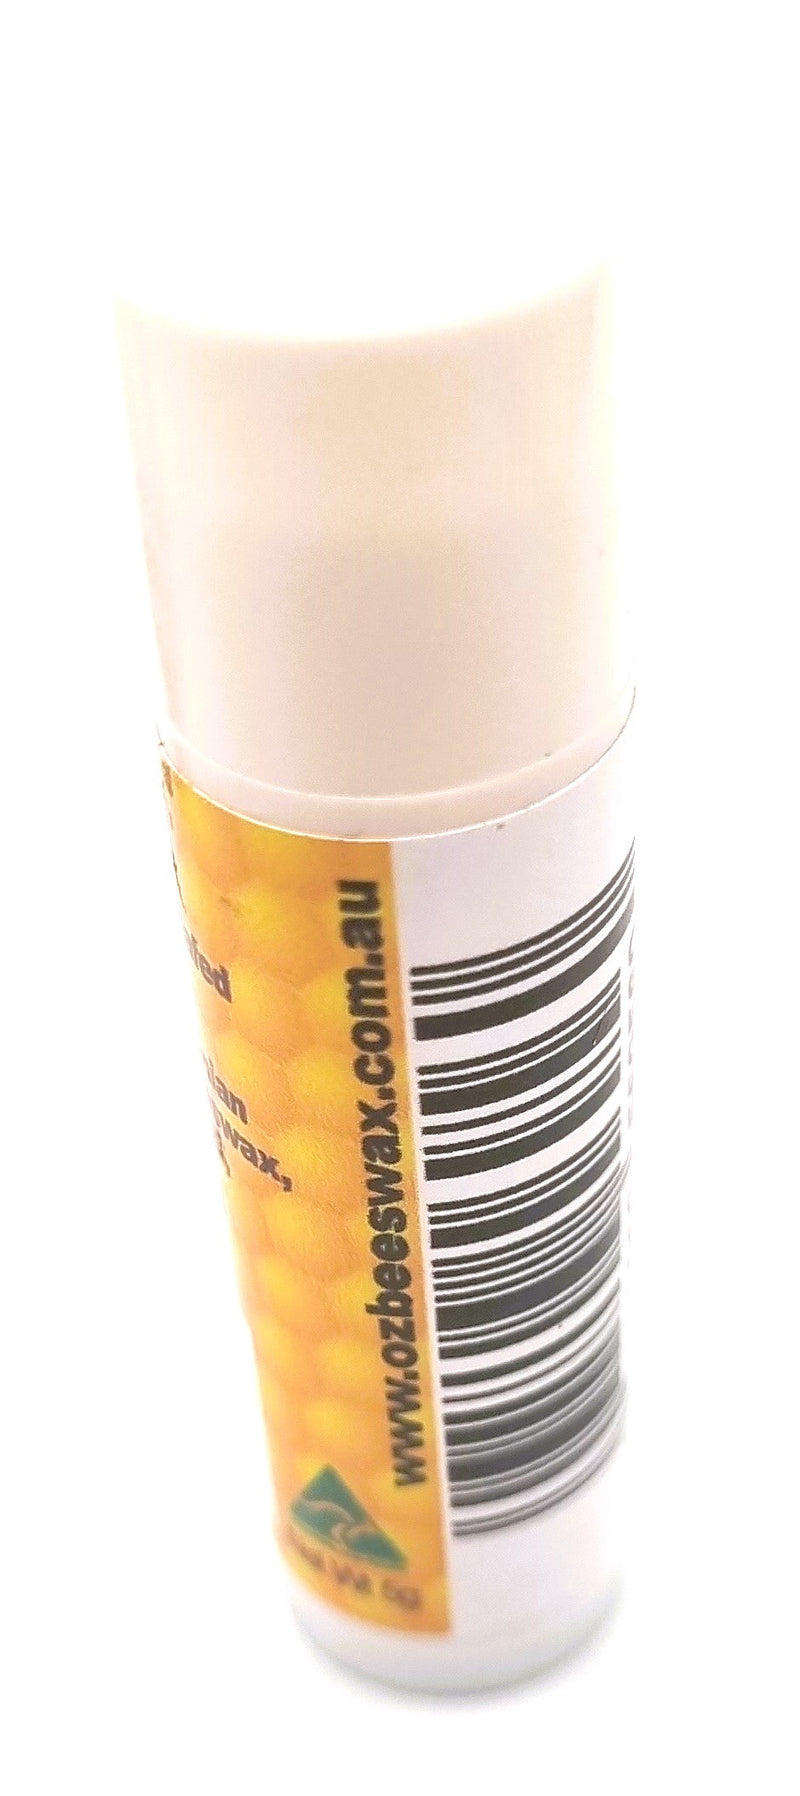 Beeswax Lip Balm 101 Uses Stick